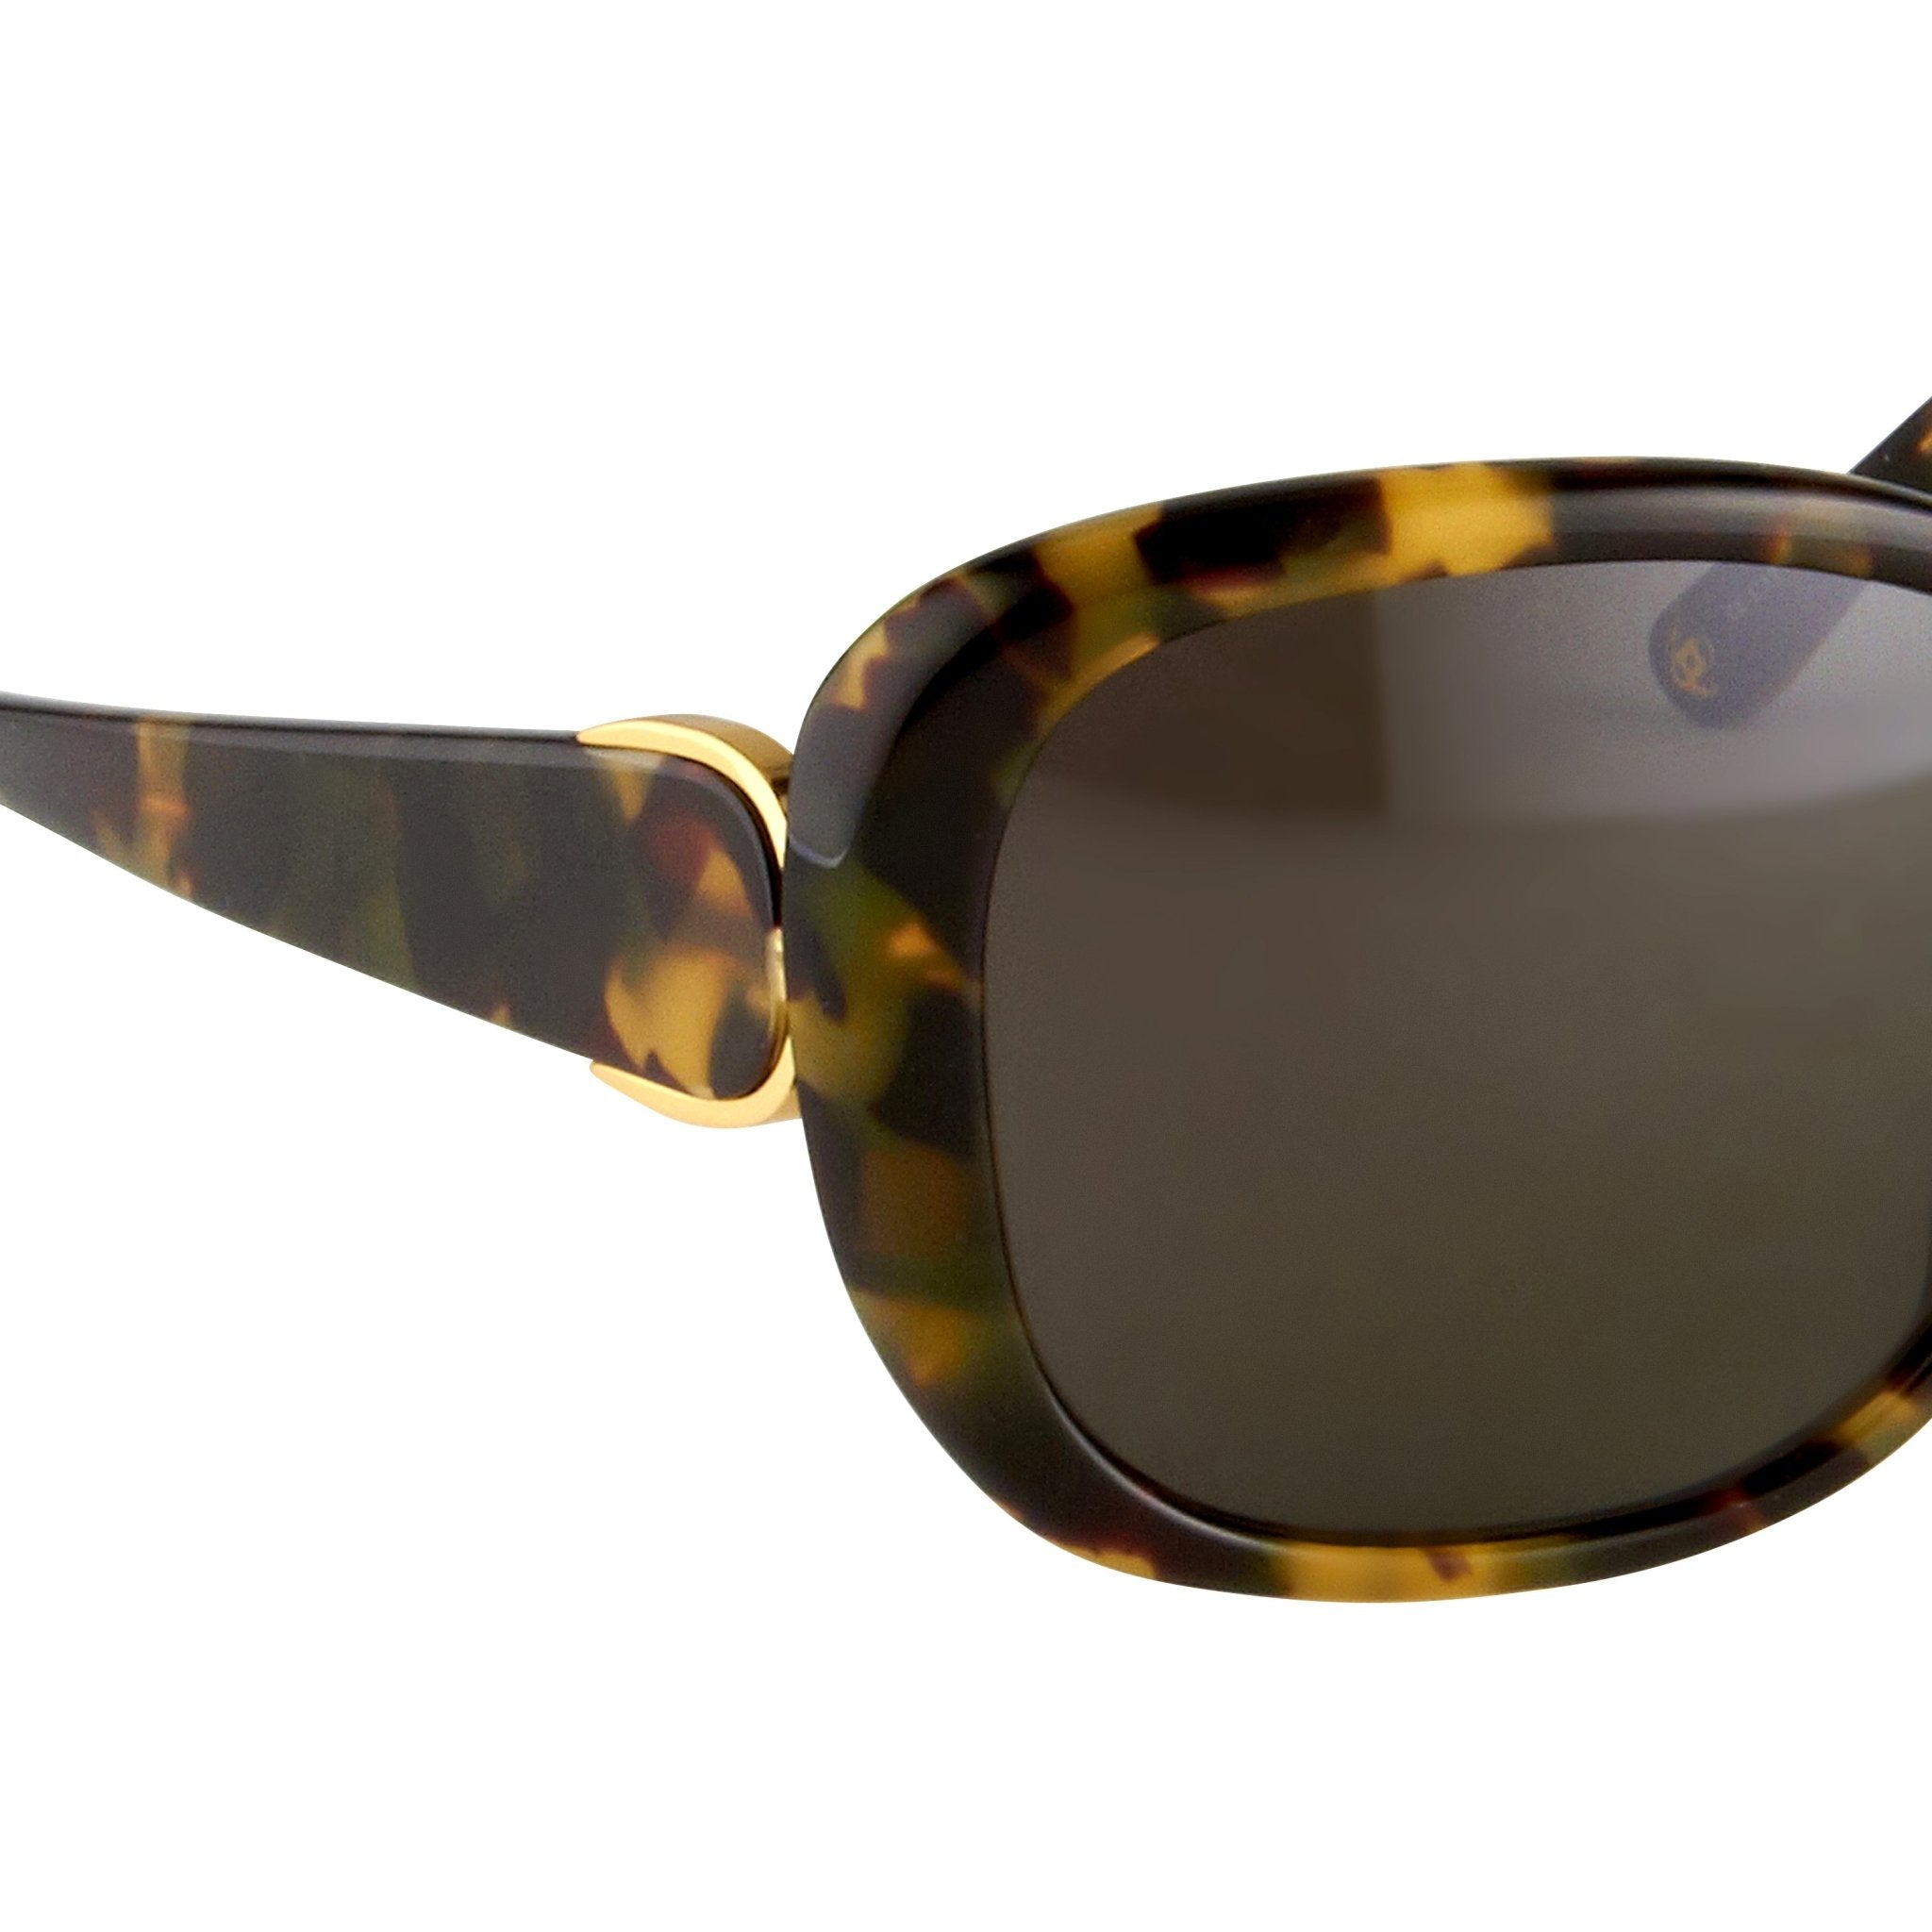 Oscar De La Renta Sunglasses Oversized Frame Tortoise Shell and Grey Lenses - ODLR45C2SUN - Watches & Crystals